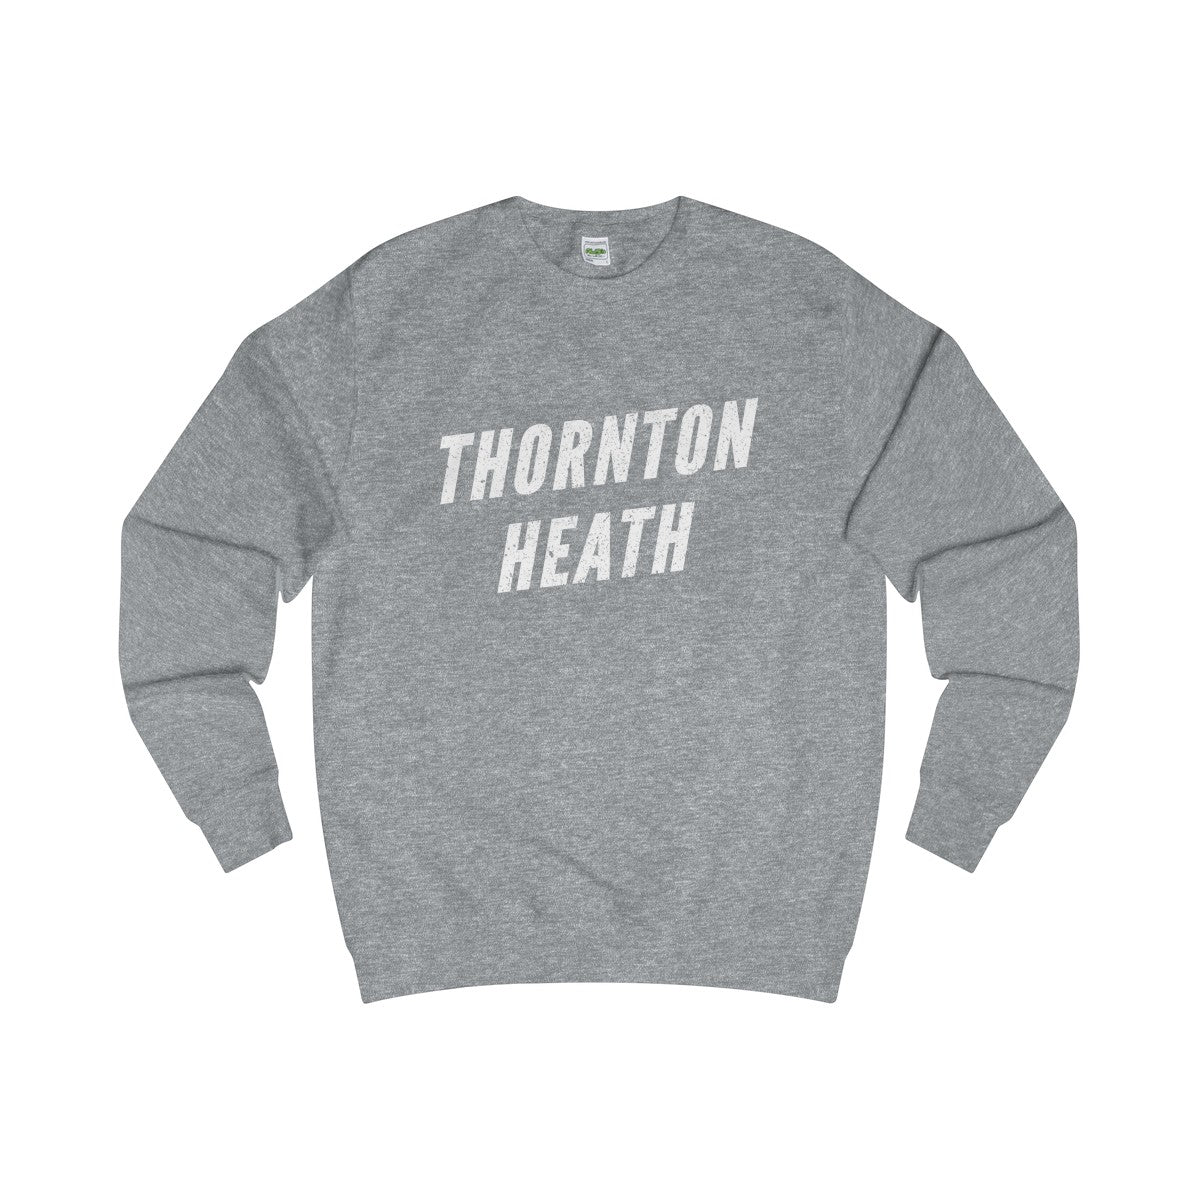 Thornton Heath Sweater